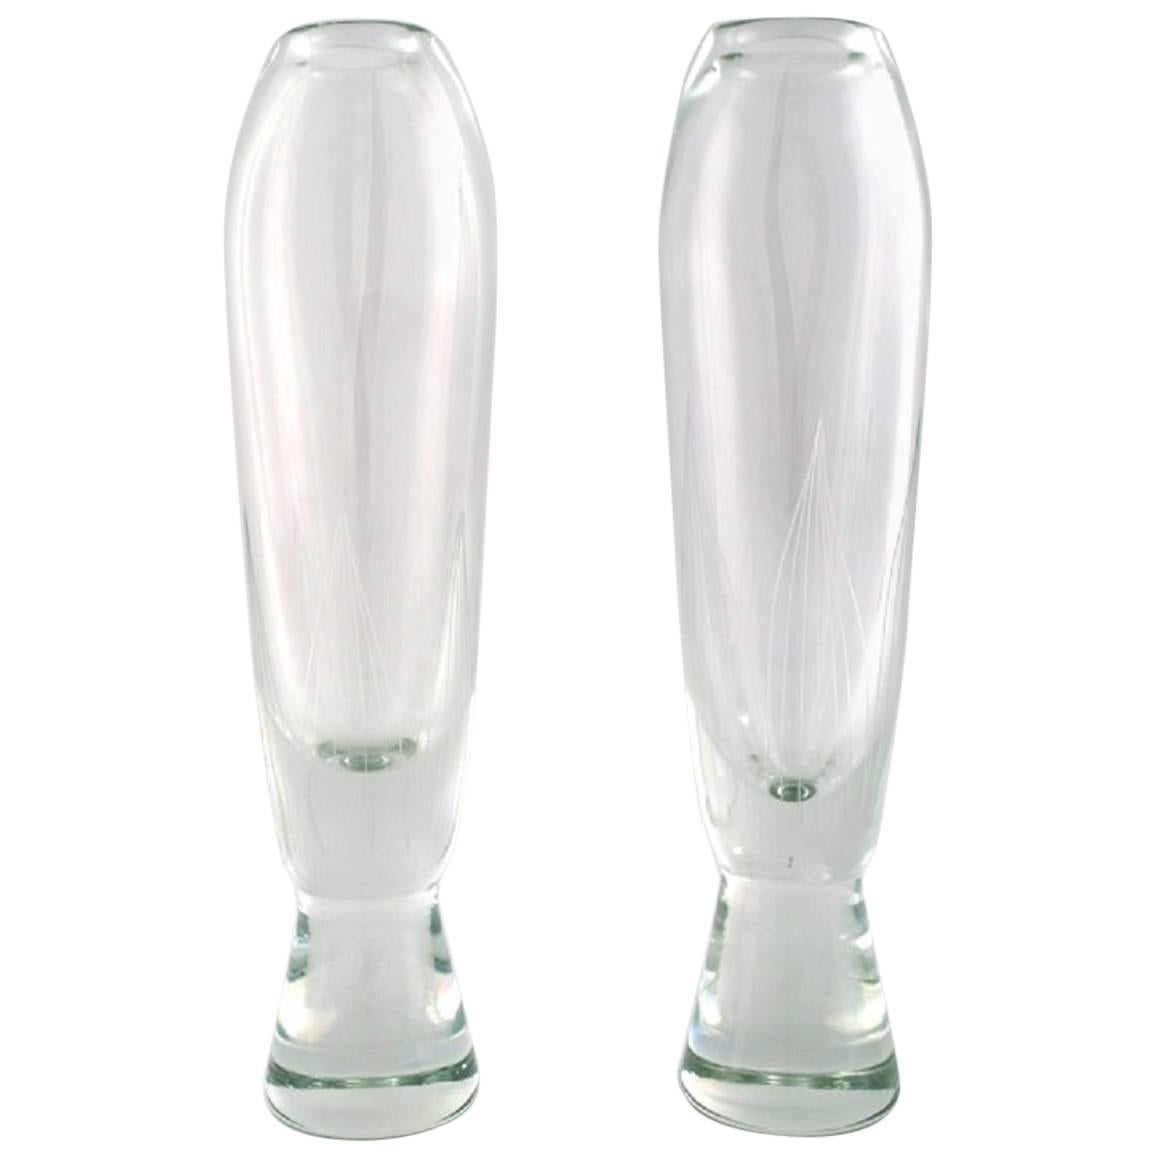 Pair of Large Orrefors Glass Vases, Stylish Swedish Design, 1950s-1960s